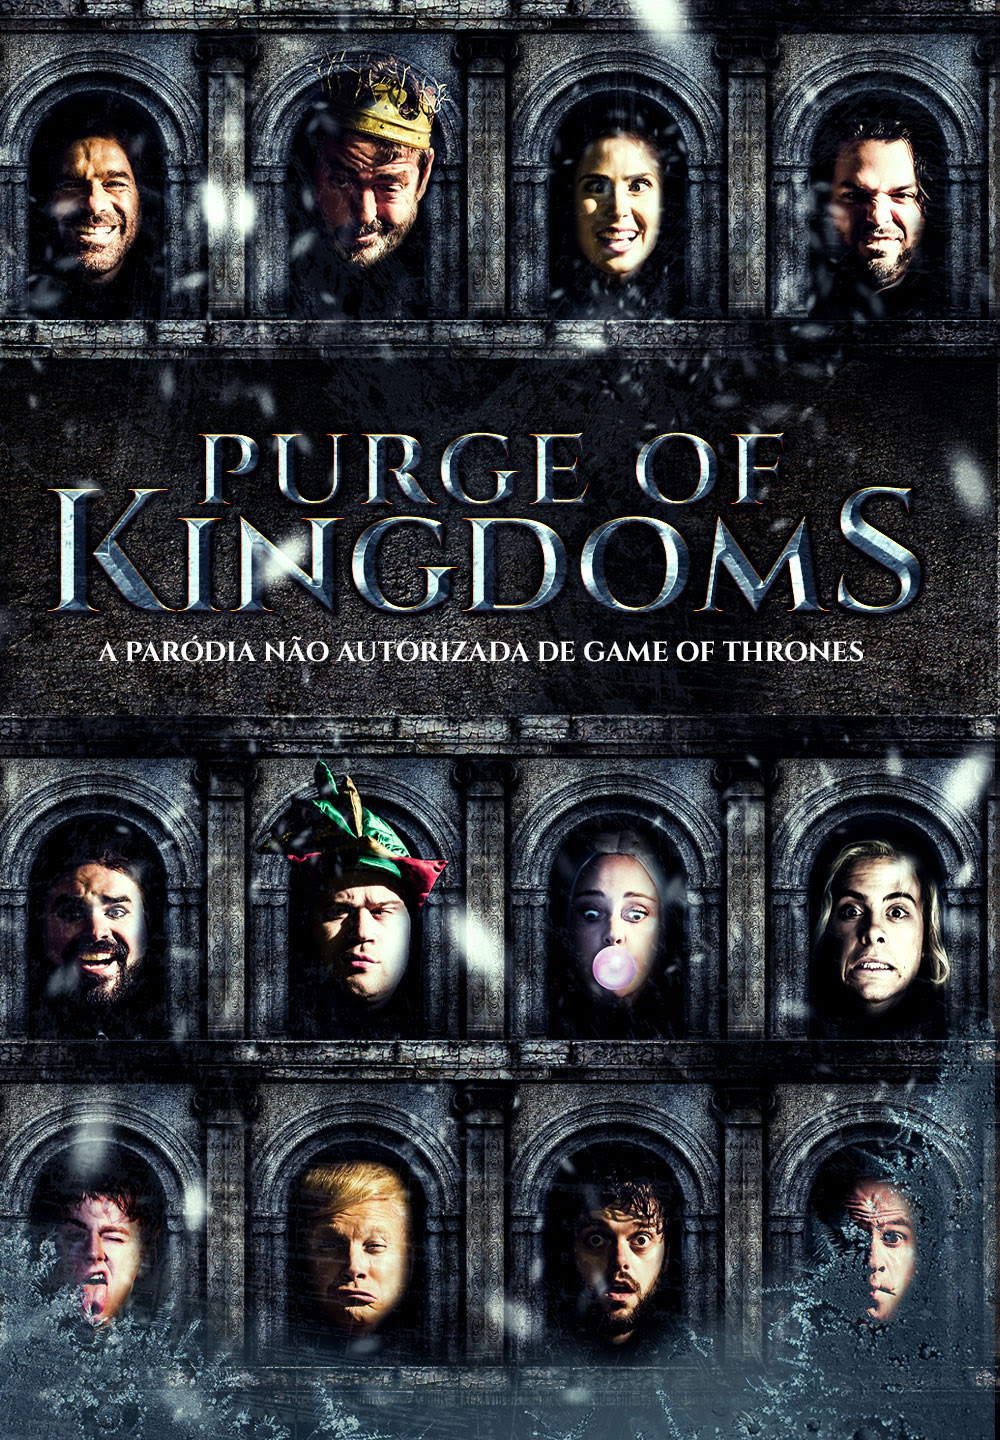 2019 Purge Of Kingdoms